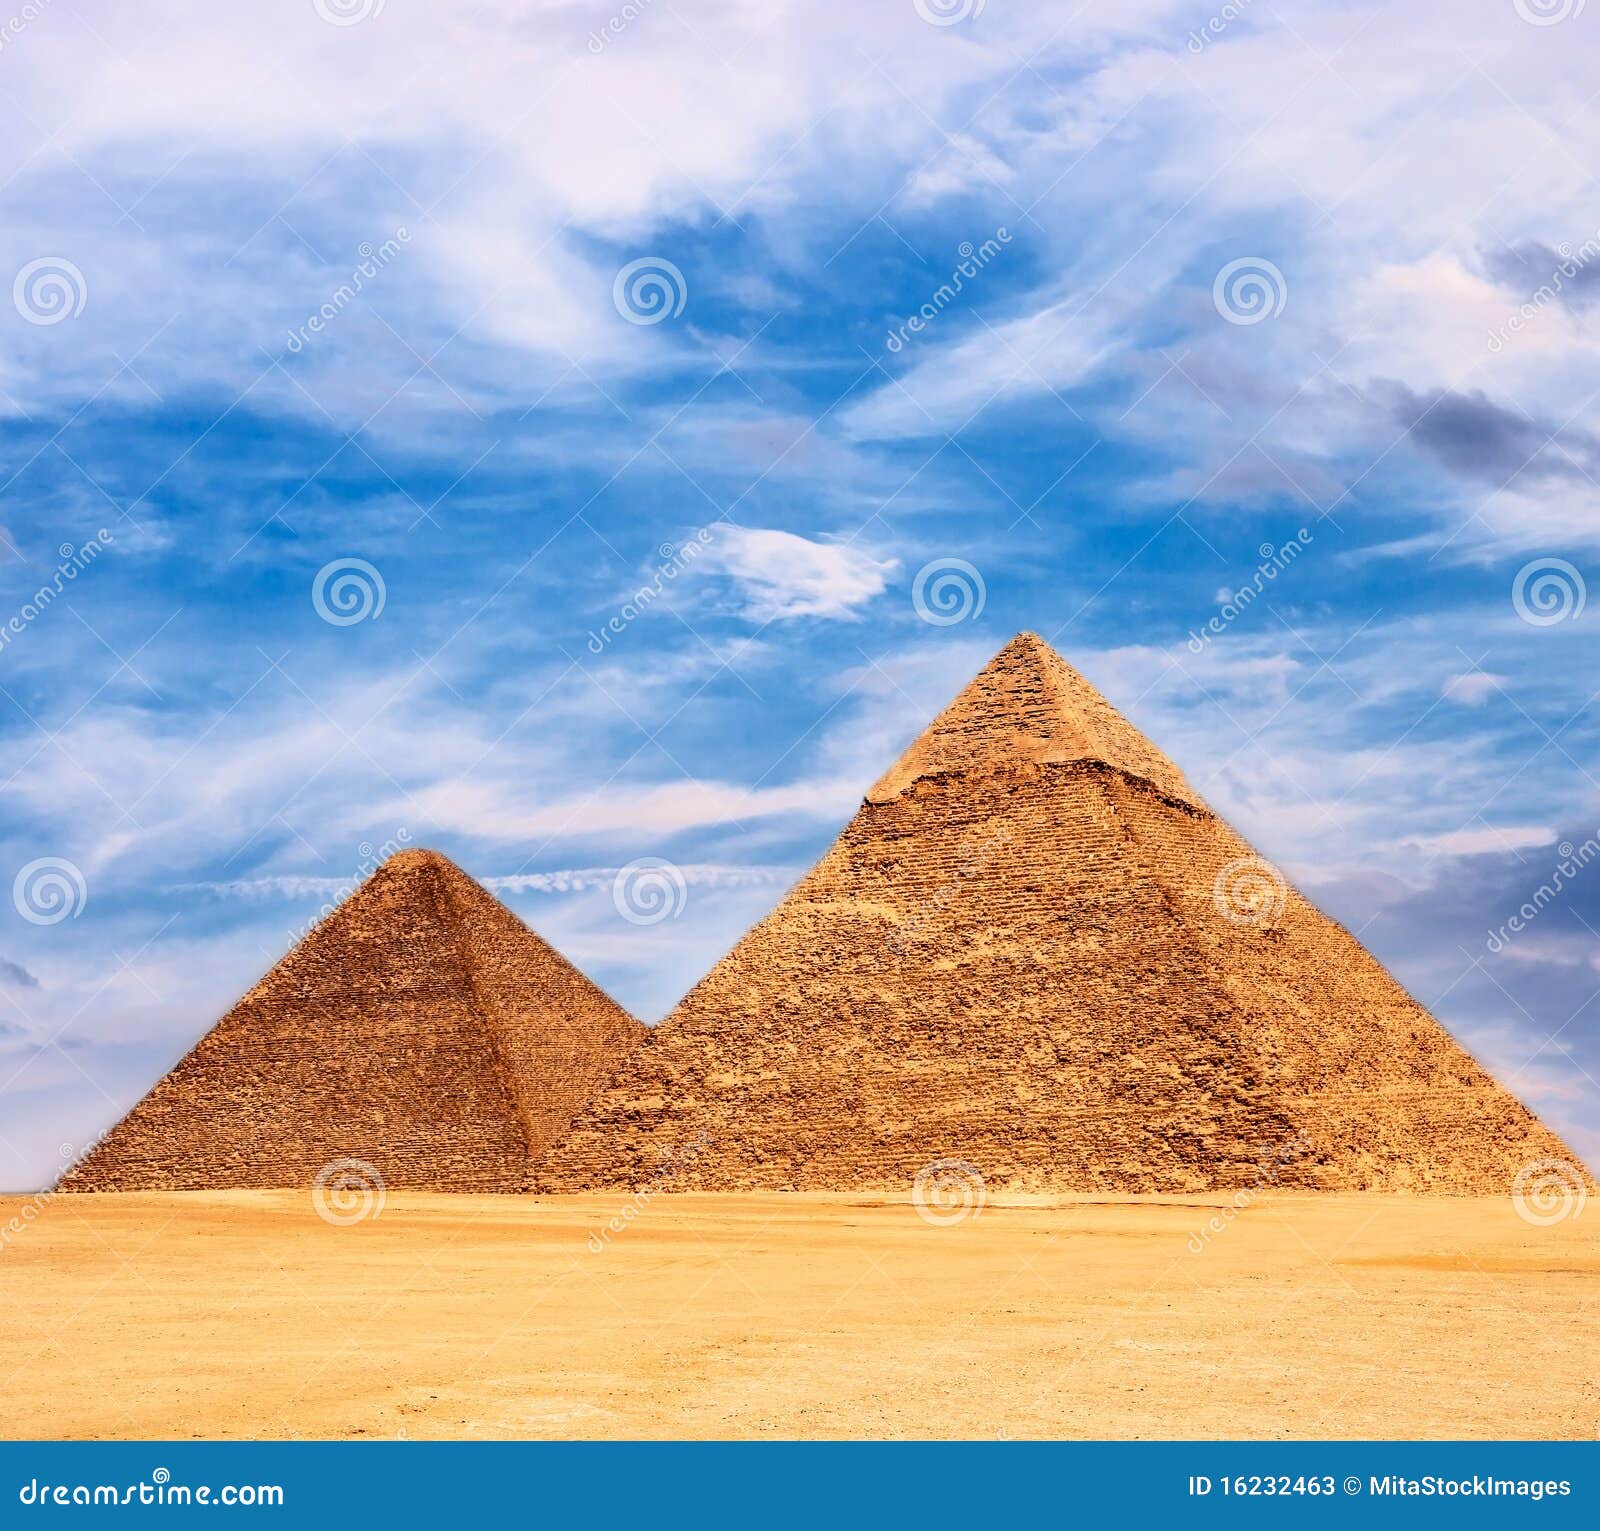 Pyramid stock image. Image of landscape, camel, sand - 16232463